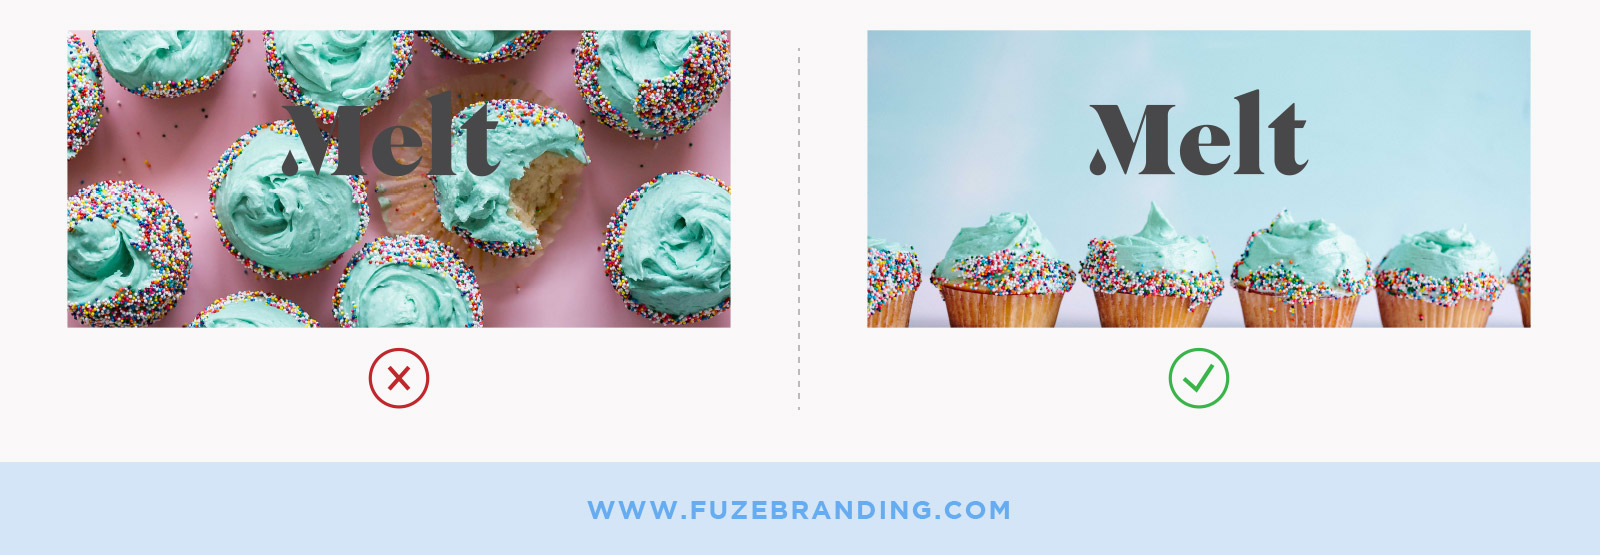 Fuze-Branding-Small-Business-Logo-Design-Mistakes-Photo-Overlay